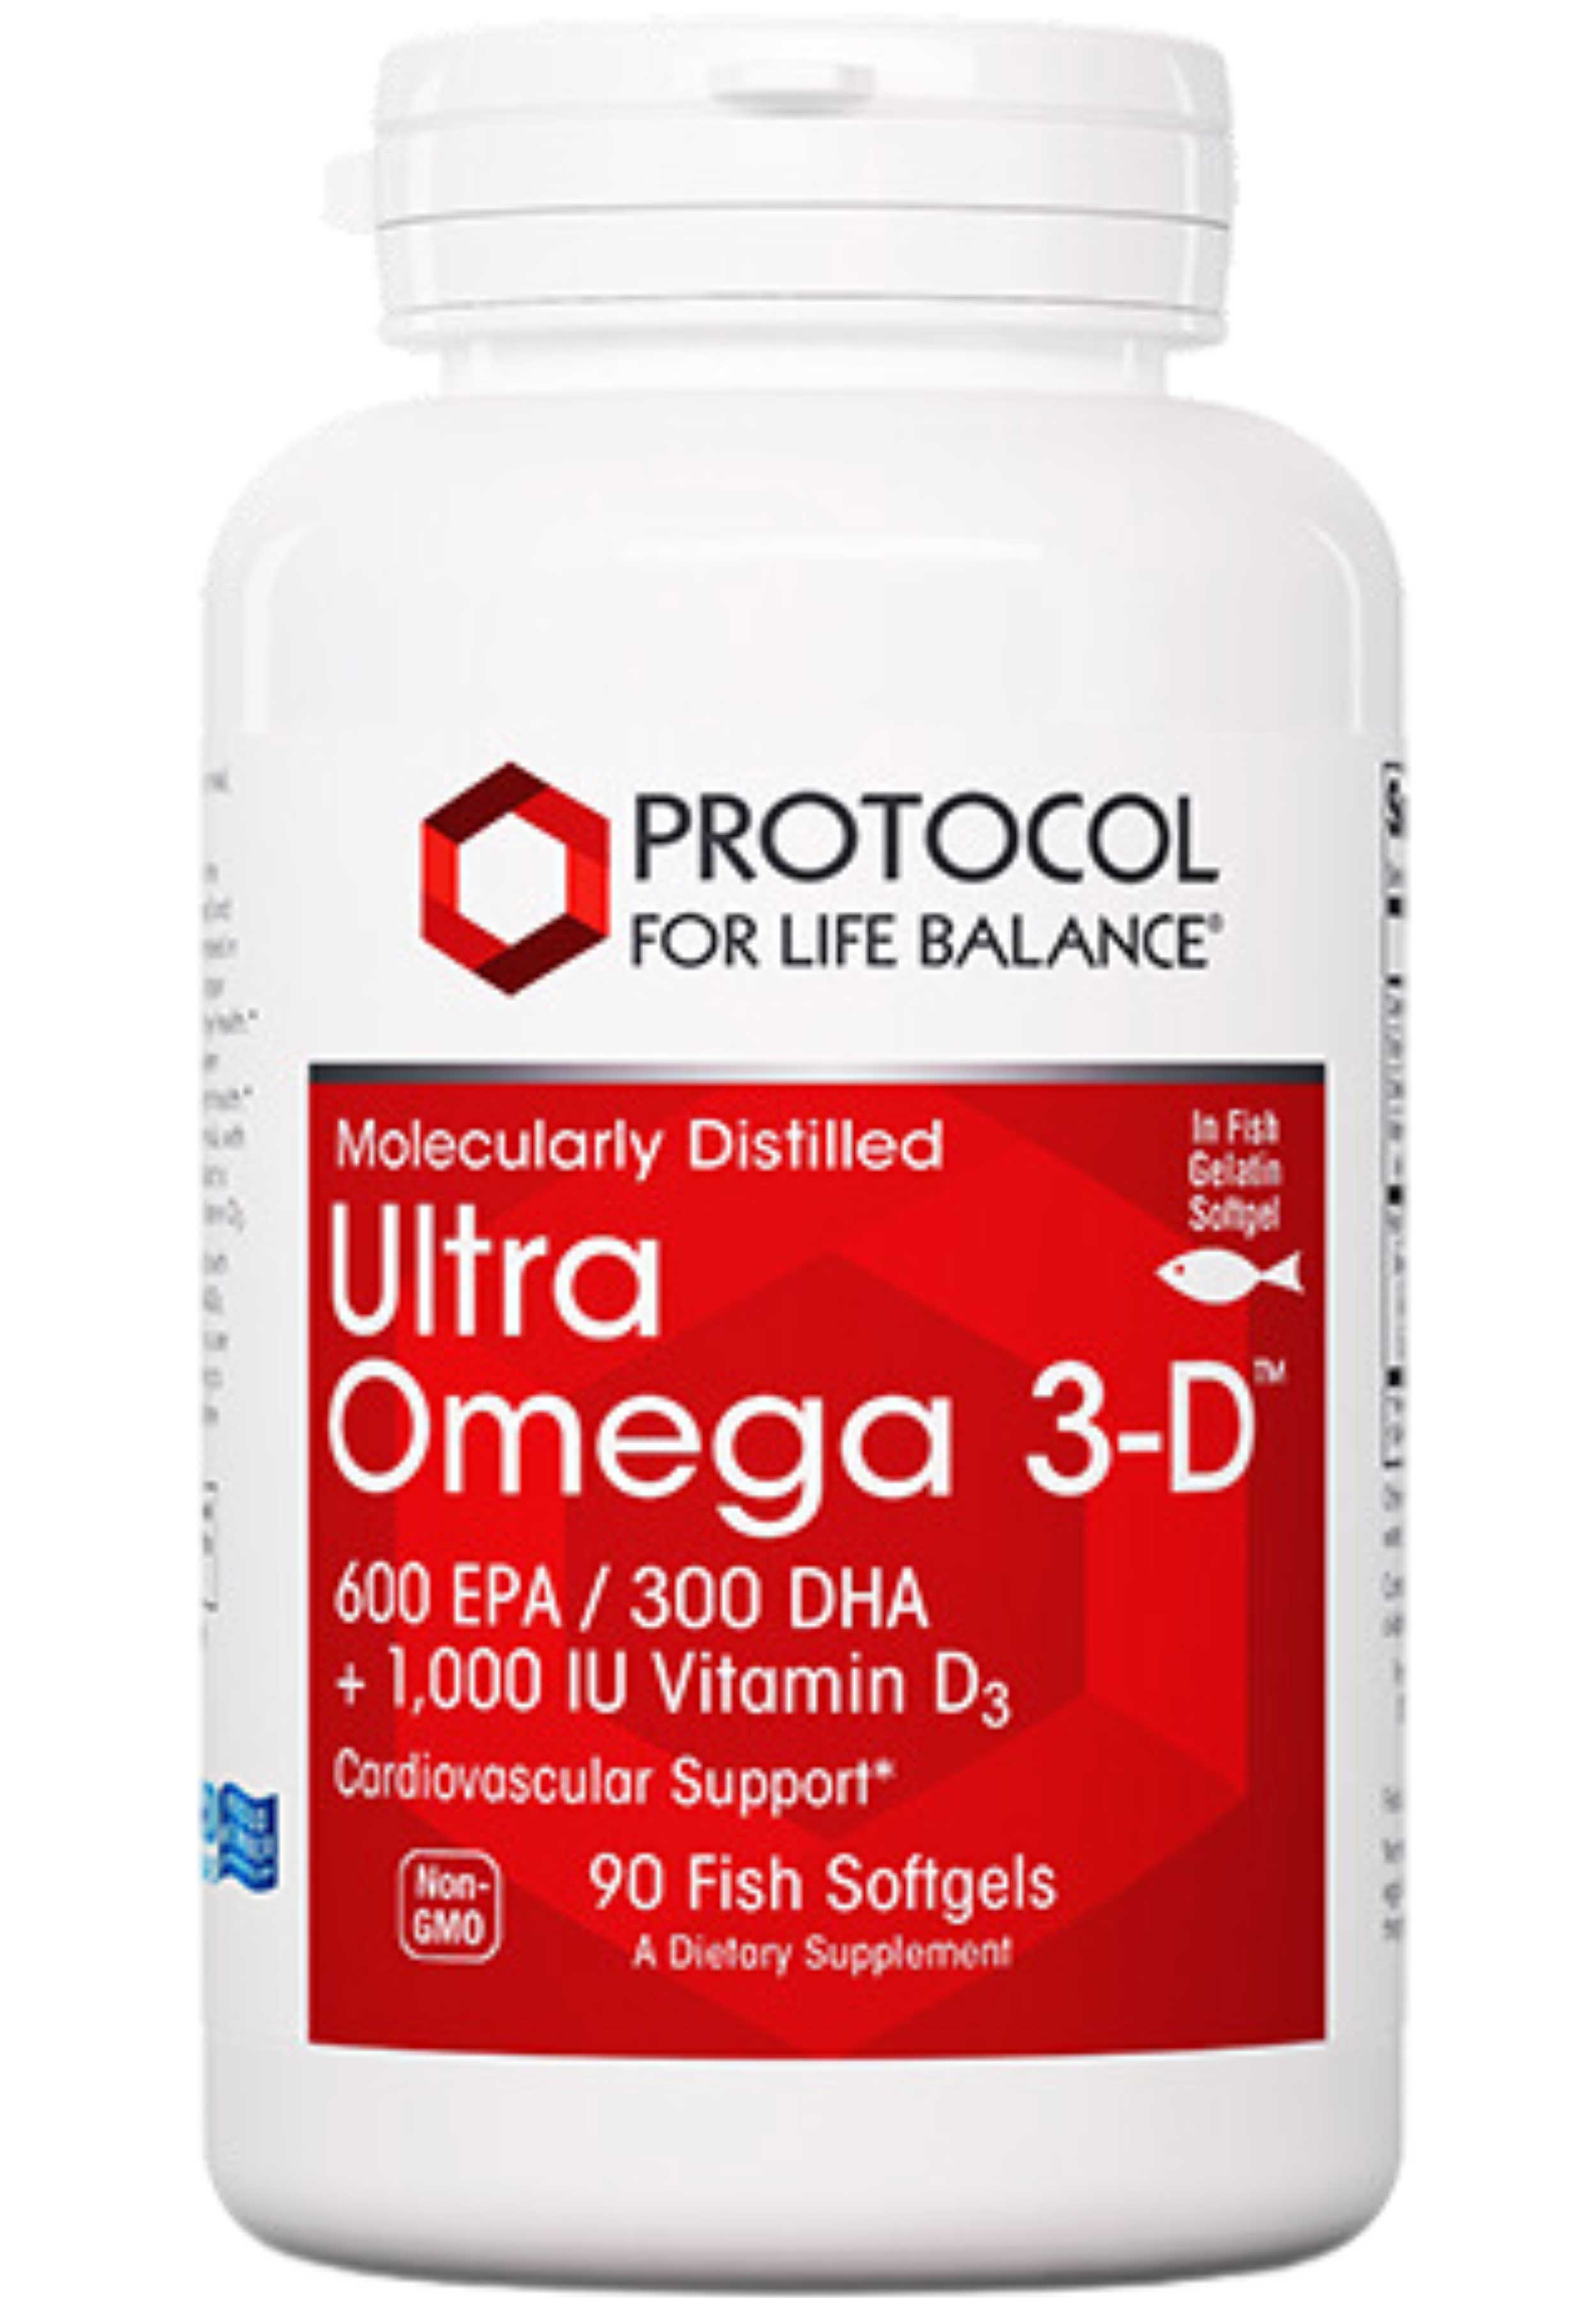 Protocol for Life Balance Ultra Omega 3-D